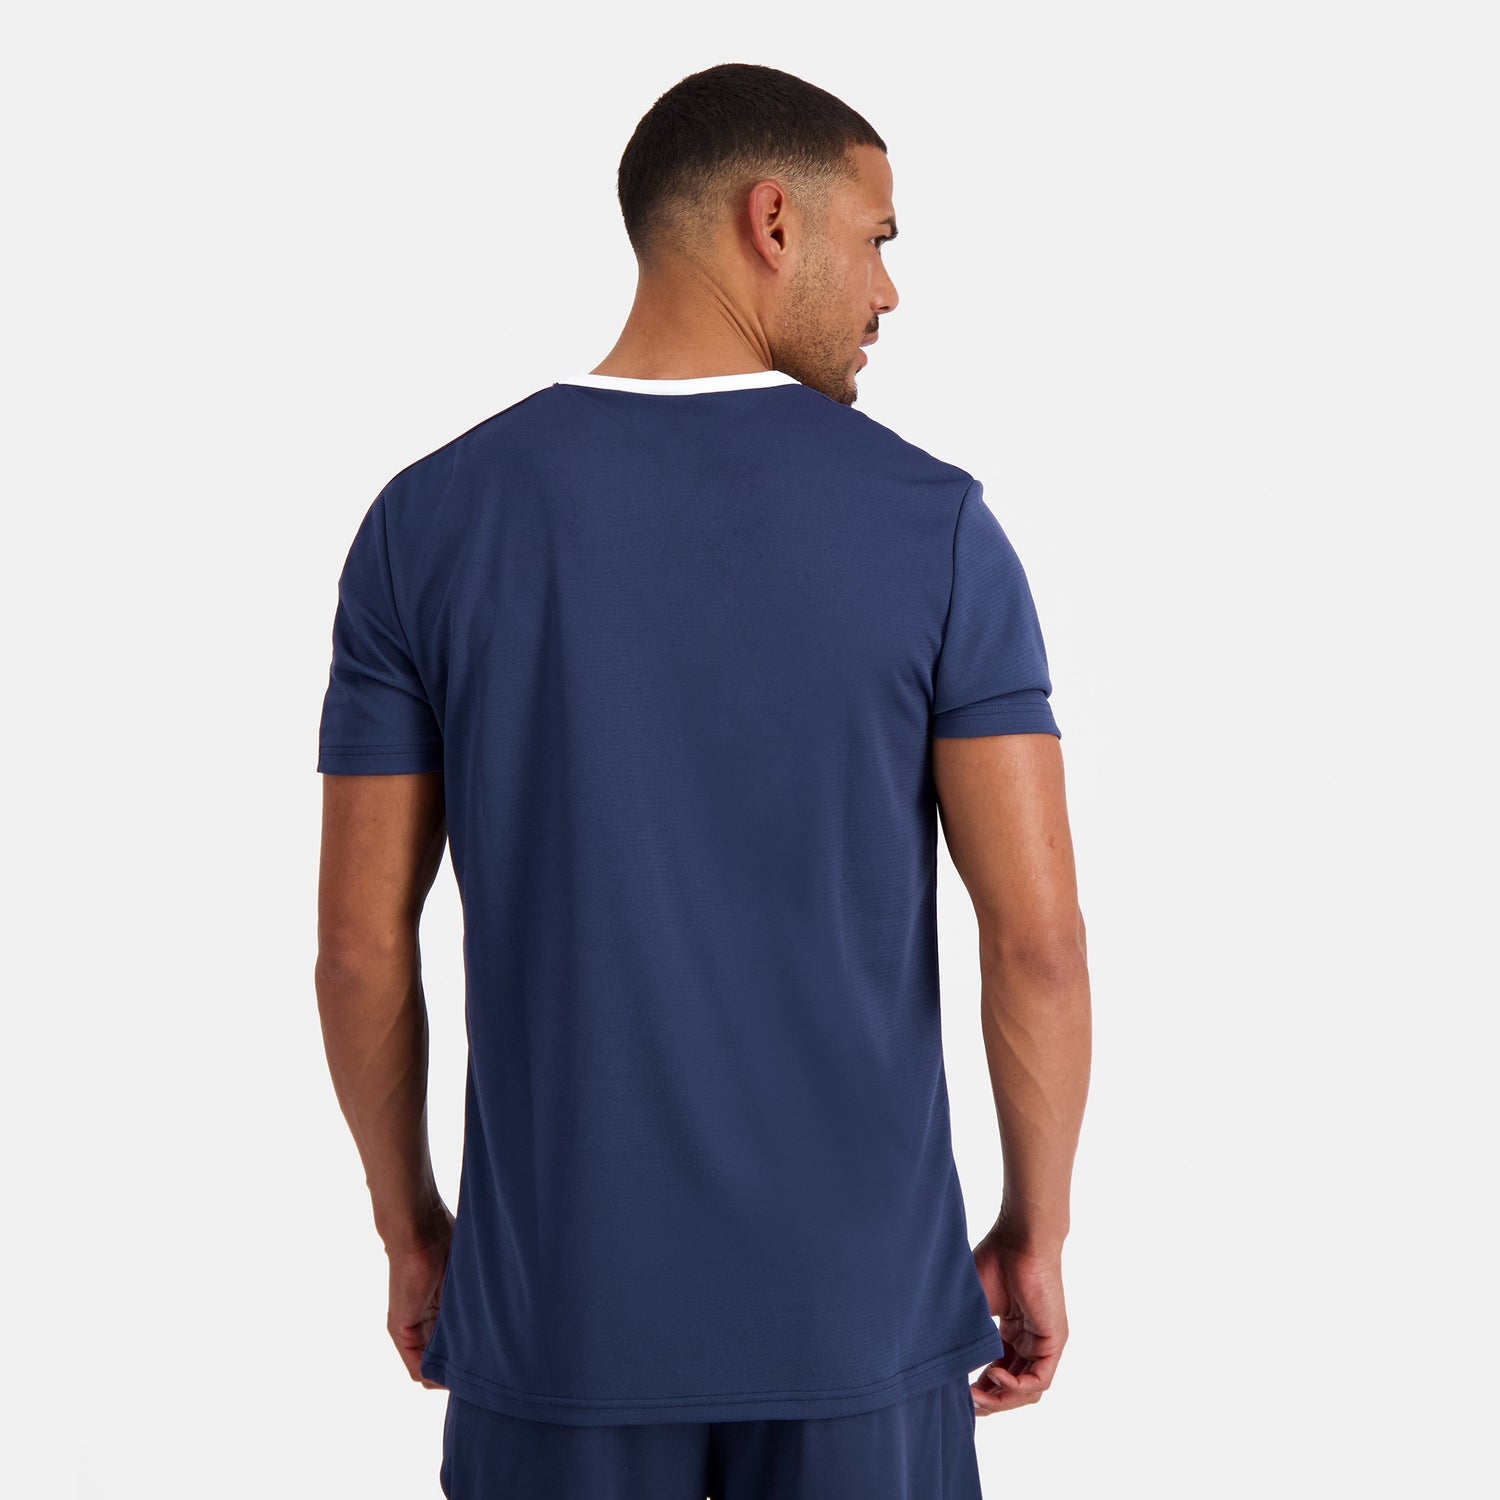 2220020-N°1 TRAINING Tee SS M dress blues  | Camiseta Hombre